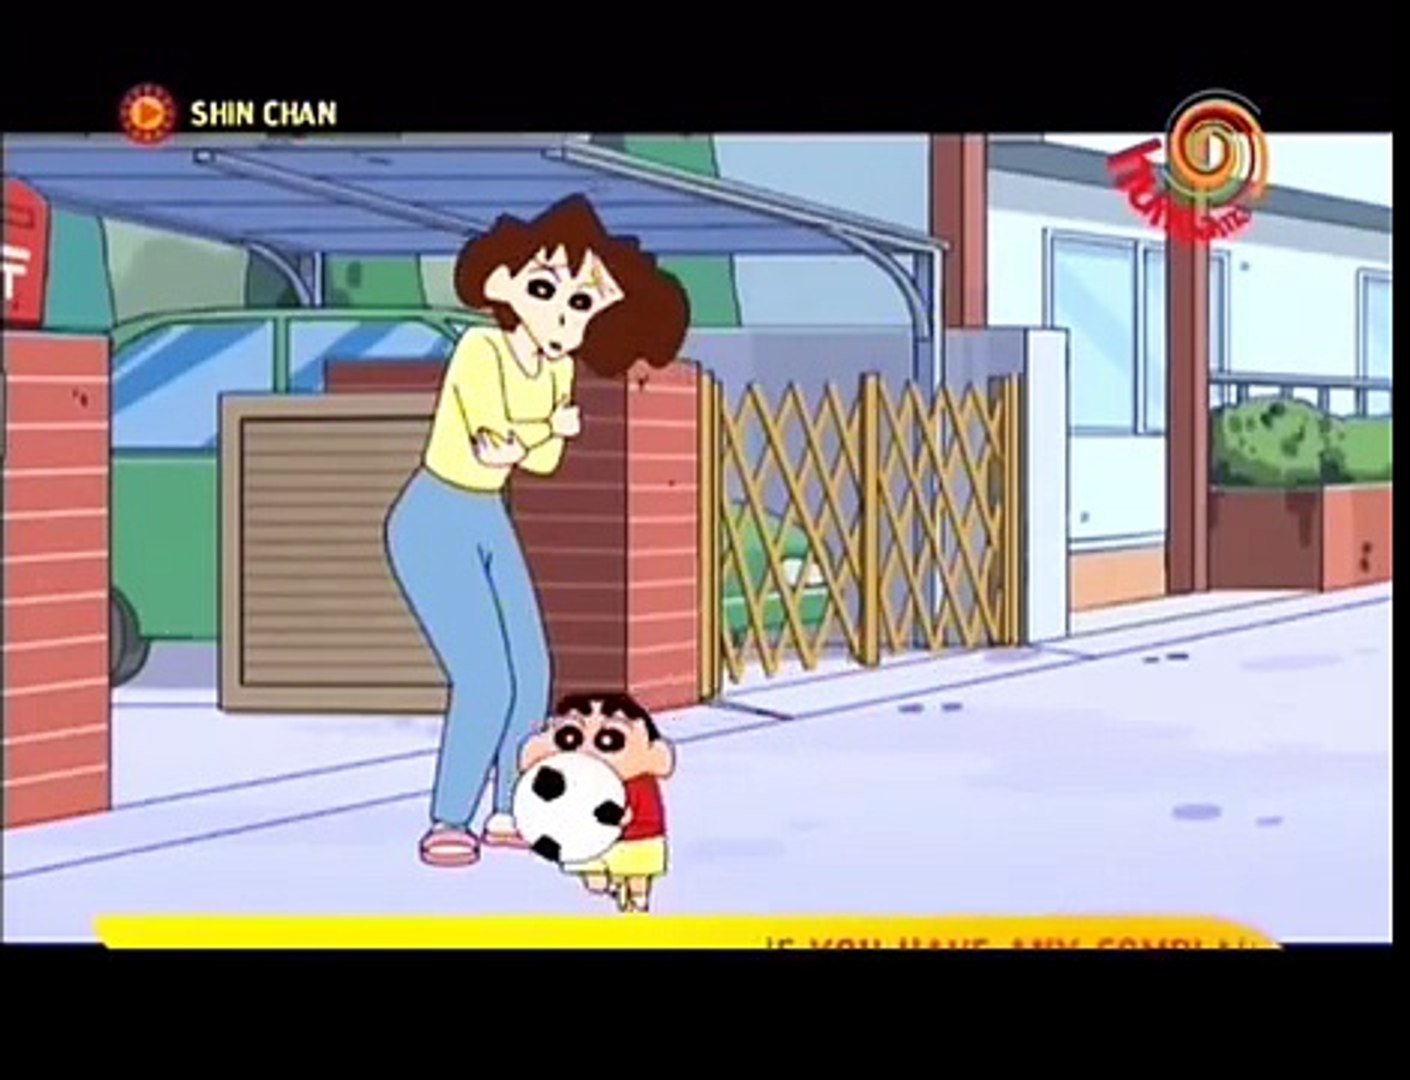 ShinChan Hindi Episode Bo Mera Accha Dost Hai - video Dailymotion